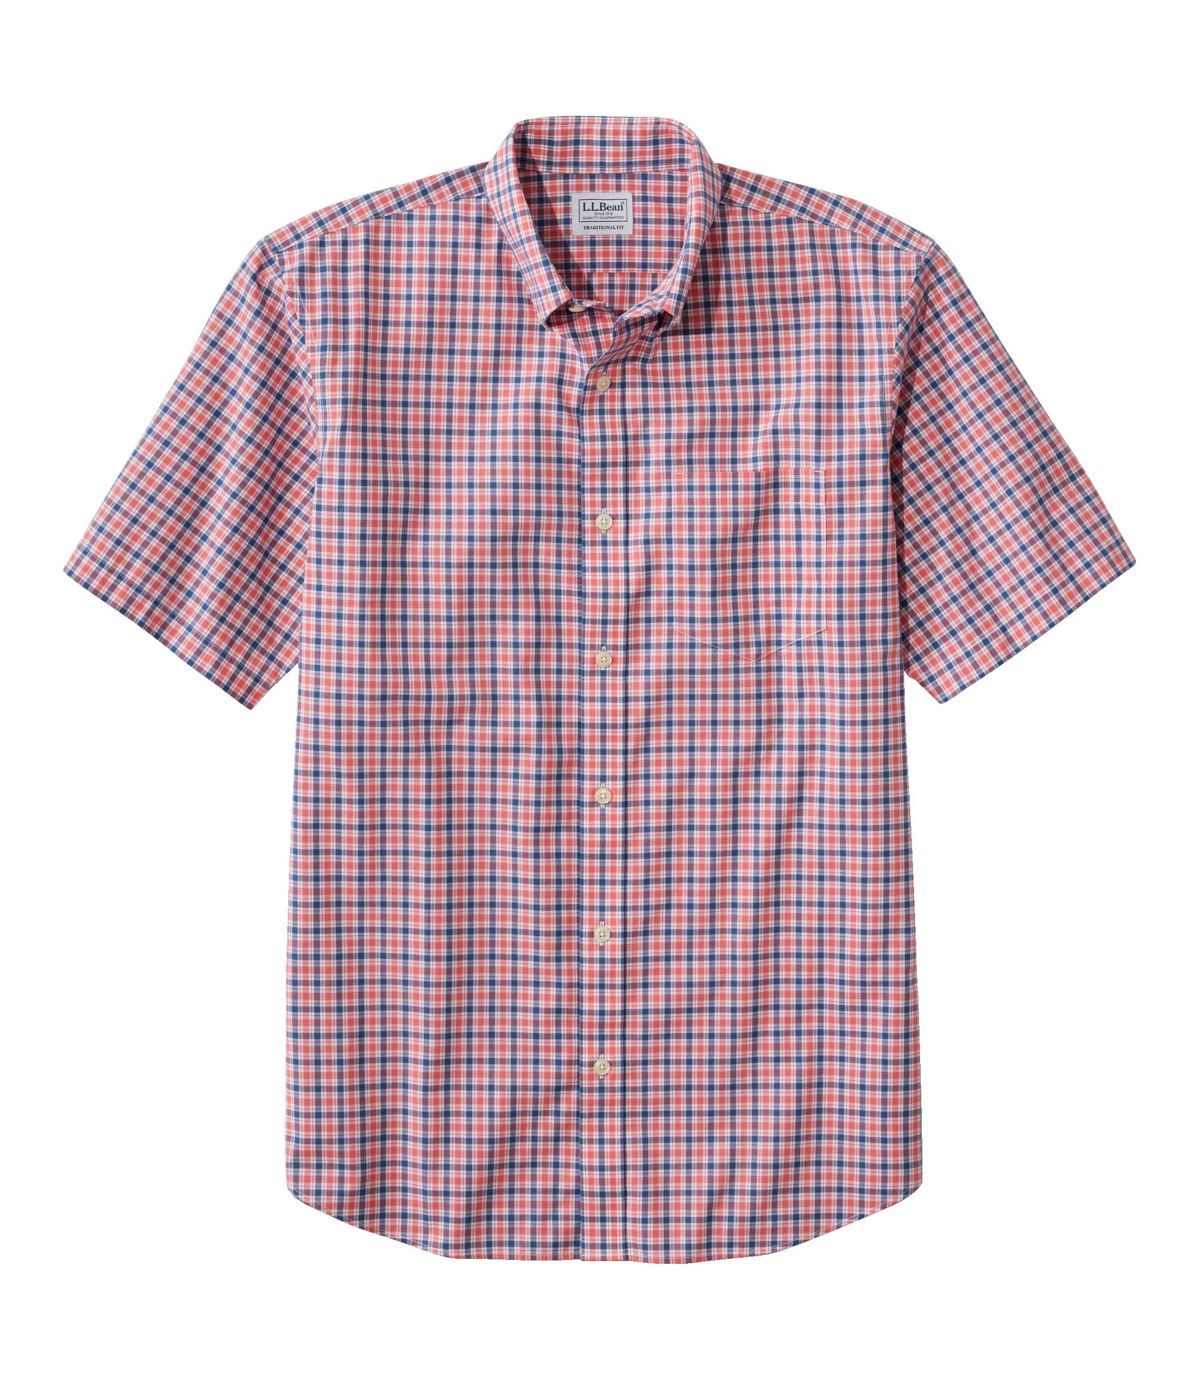 Men's Wrinkle-Free Kennebunk Sport Shirt, Traditional Fit Short-Sleeve Check | Shirts at L.L.Bean | L.L. Bean